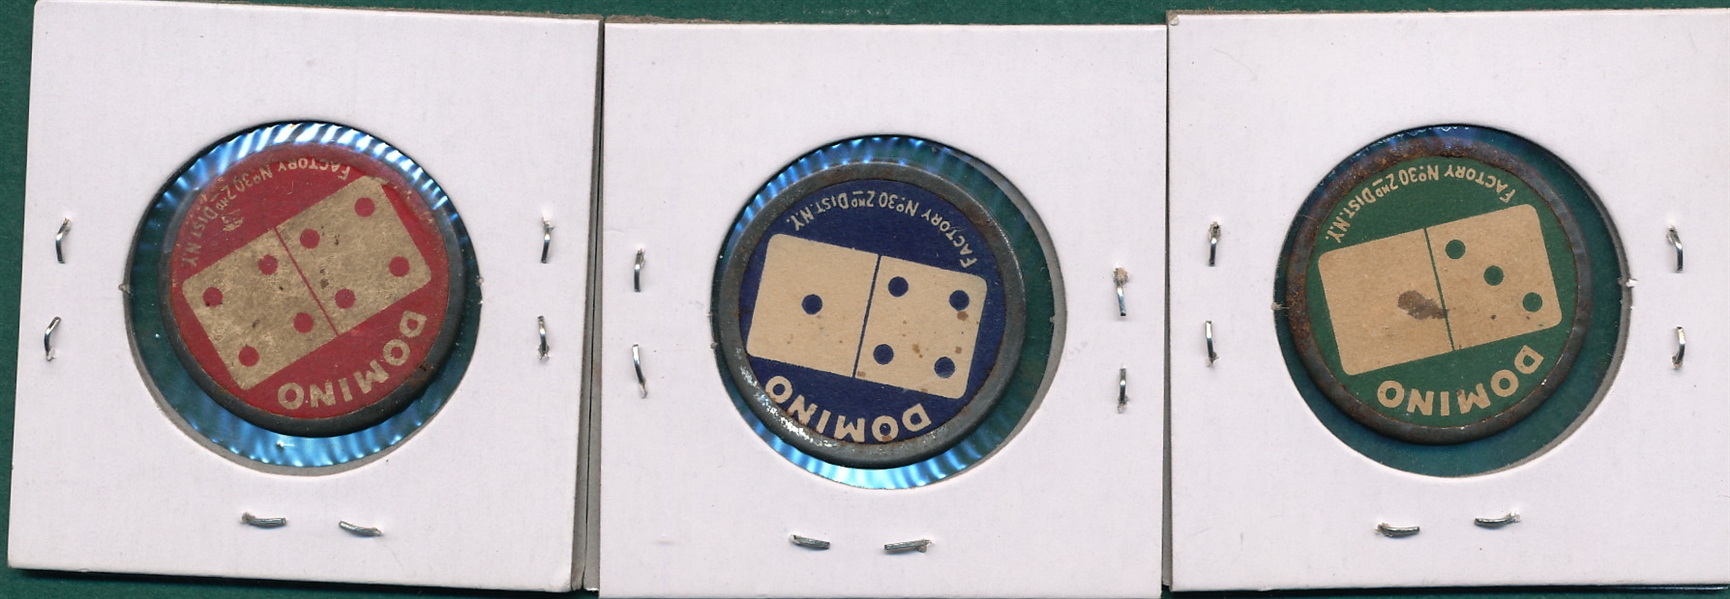 1909-12 PX7 Domino Discs Doolan, Paskert & Dooin, Phillies, Lot of (3) Sweet Caporal Cigarettes